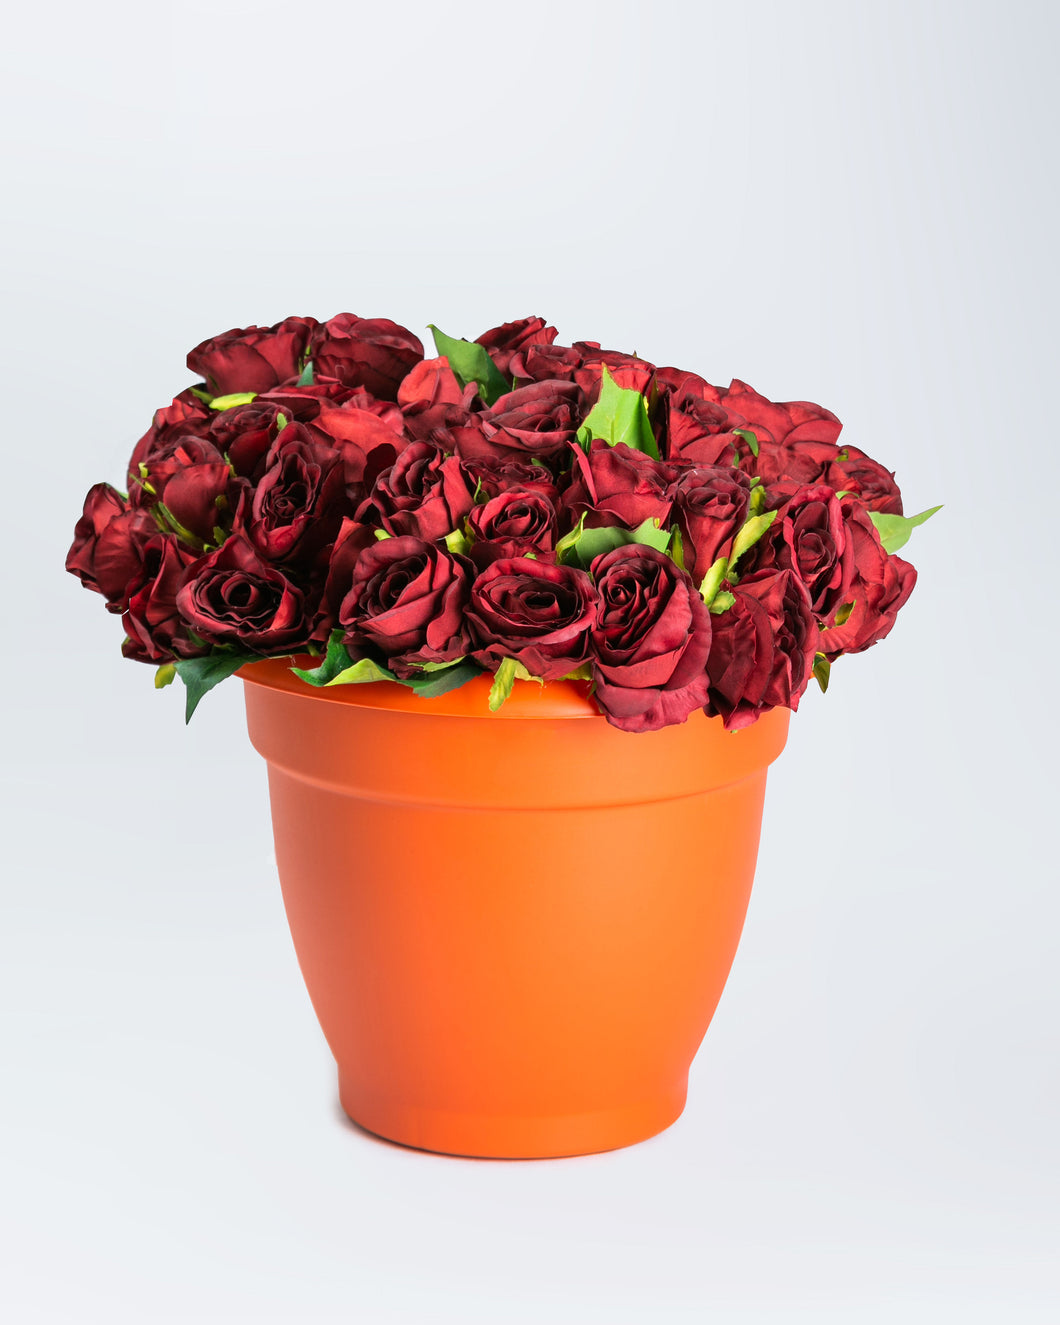 HW burgundy rose bouquet 66175 6